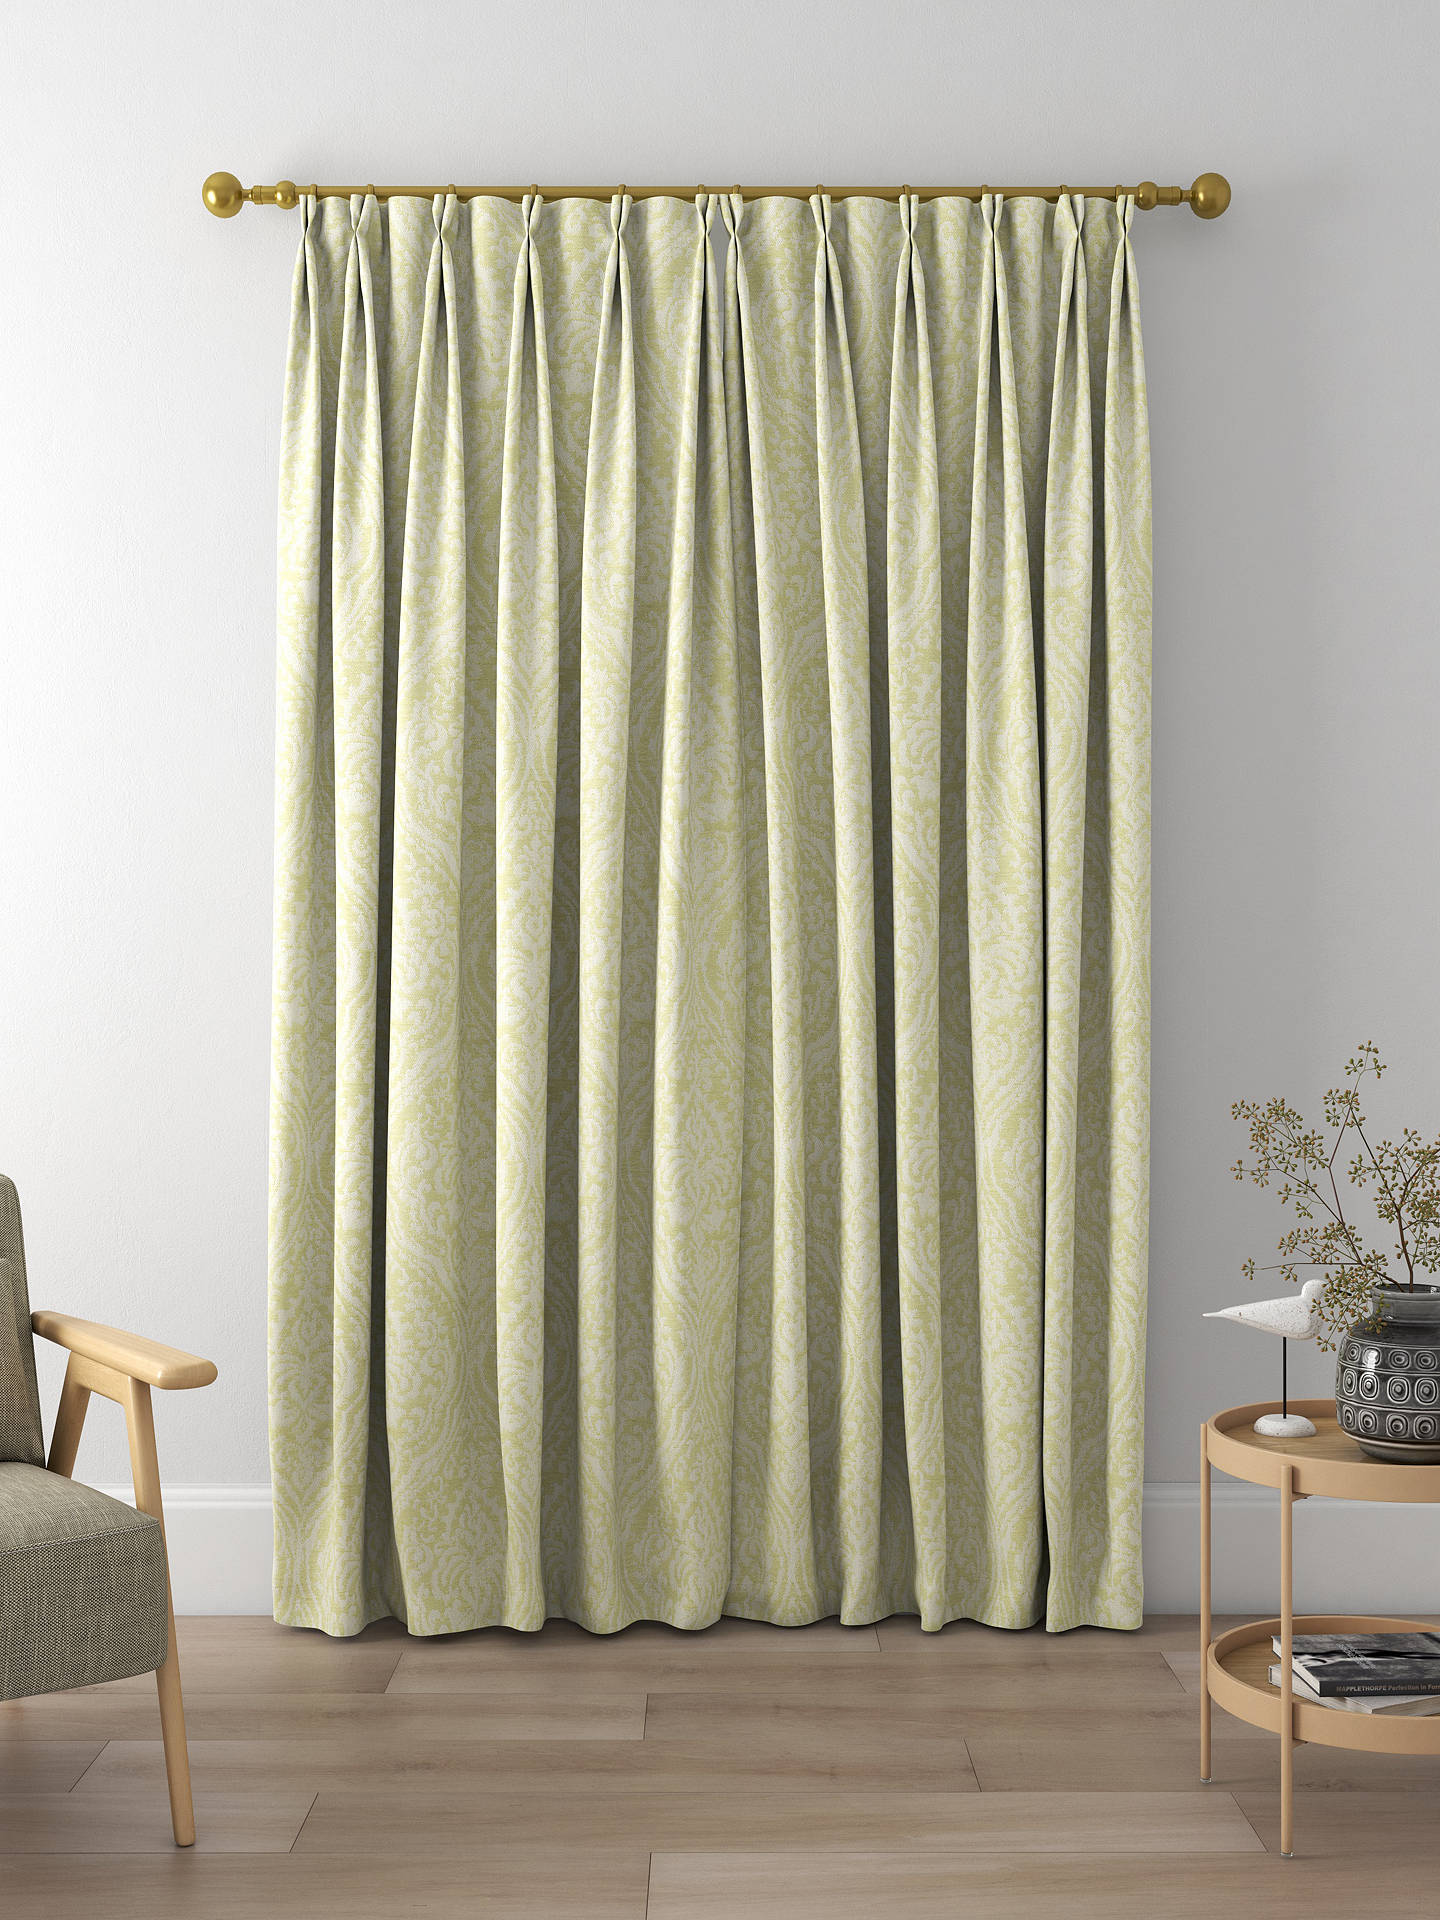 Prestigious Textiles Rosemoor Made to Measure Curtains, Zest